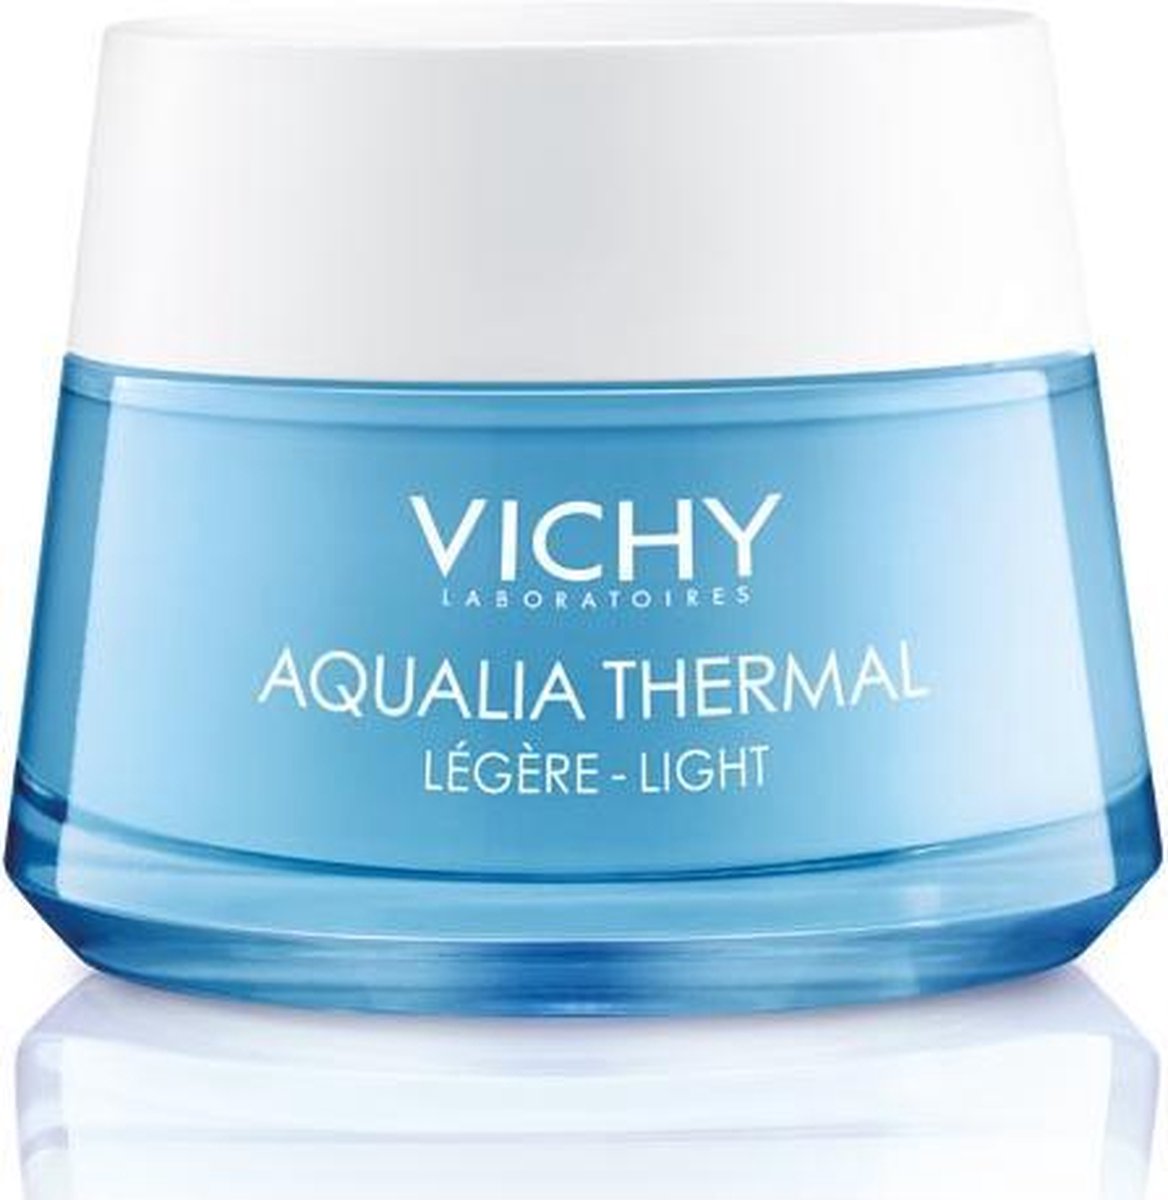 Vichy Aqualia Thermal Hydraterende Dagcrème Licht - 50ml - normale huid